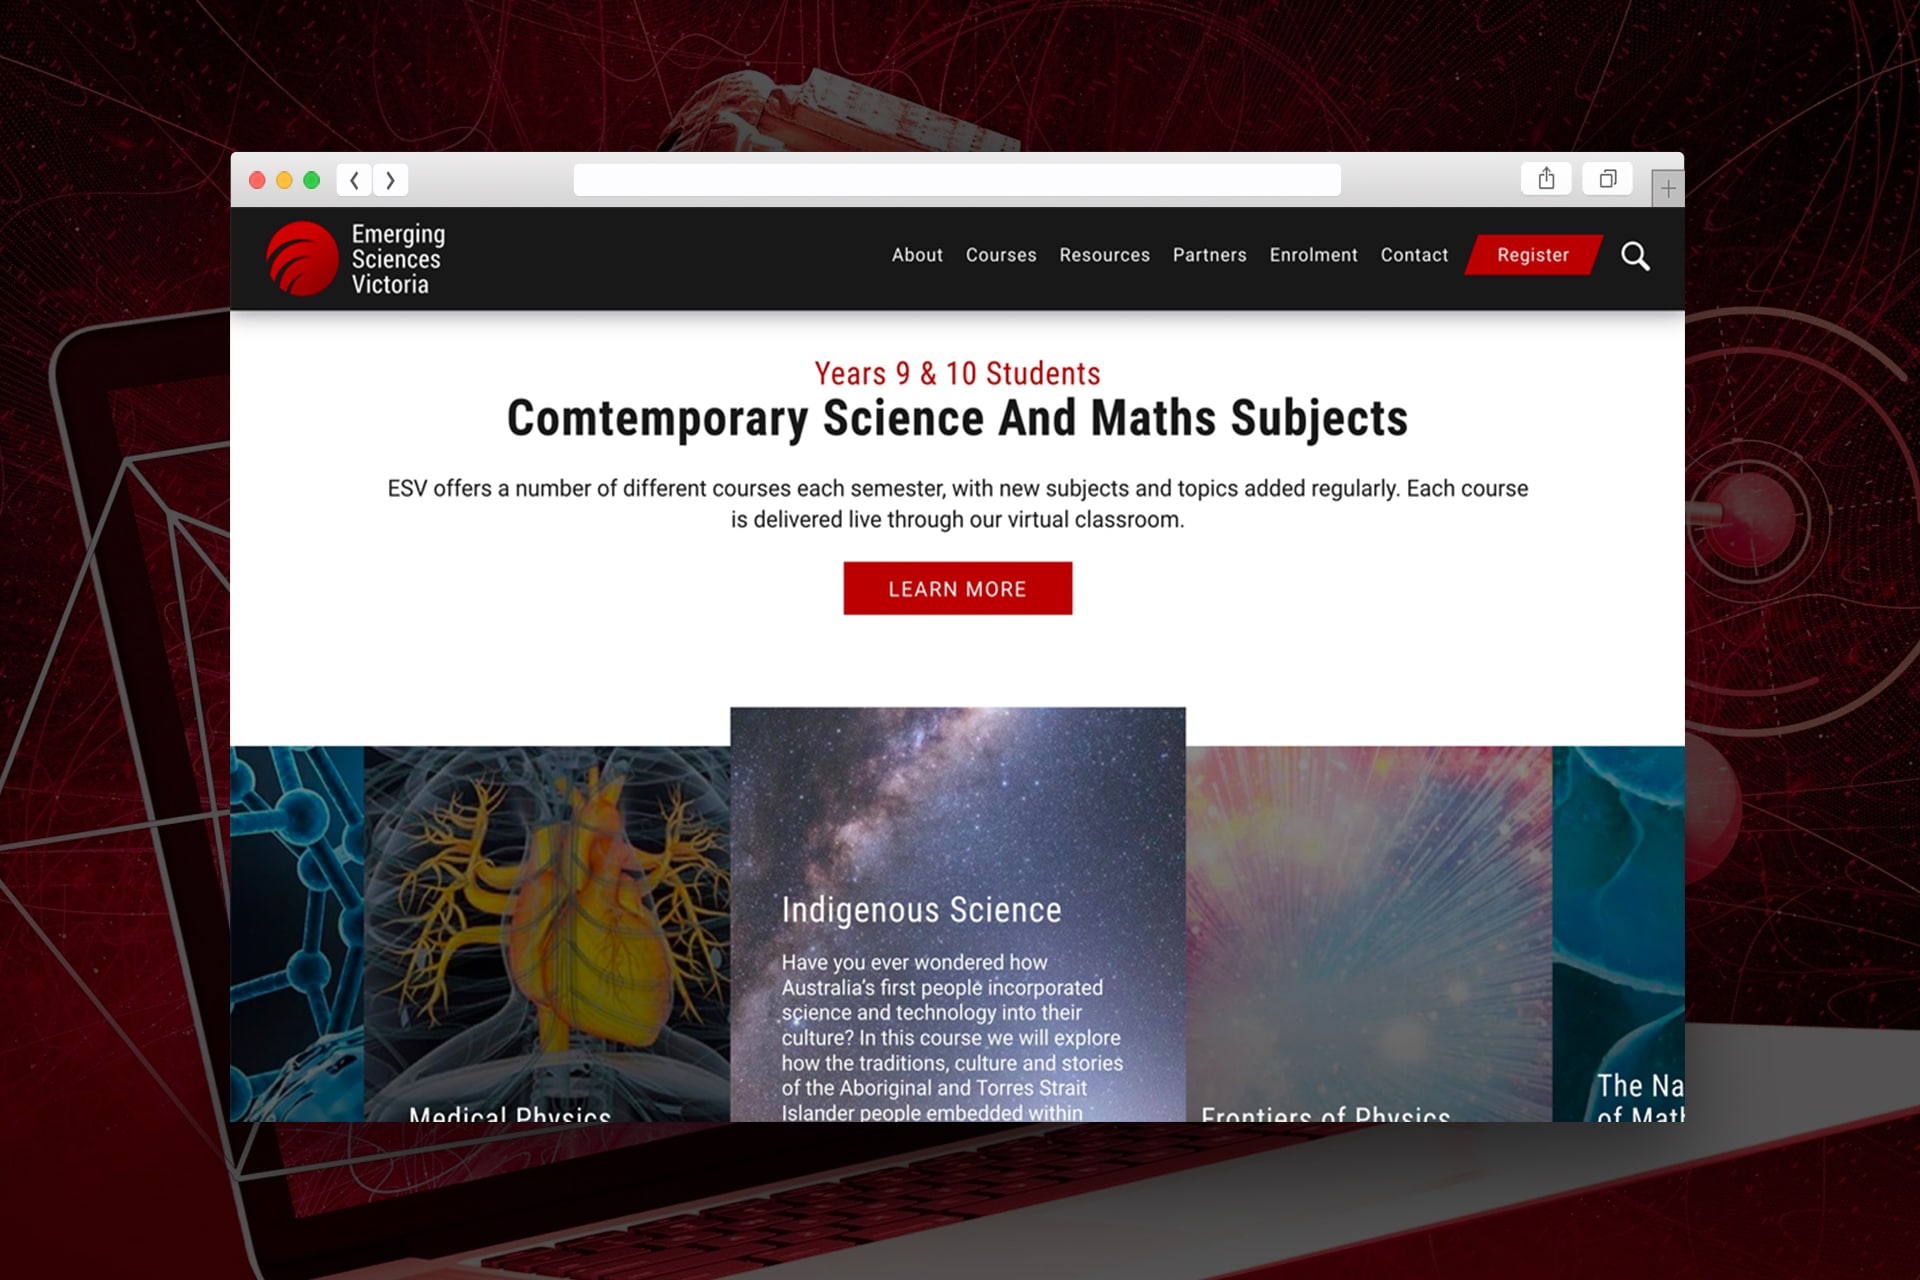 Emerging Sciences Victoria - Website Design & Development by Beyond Web